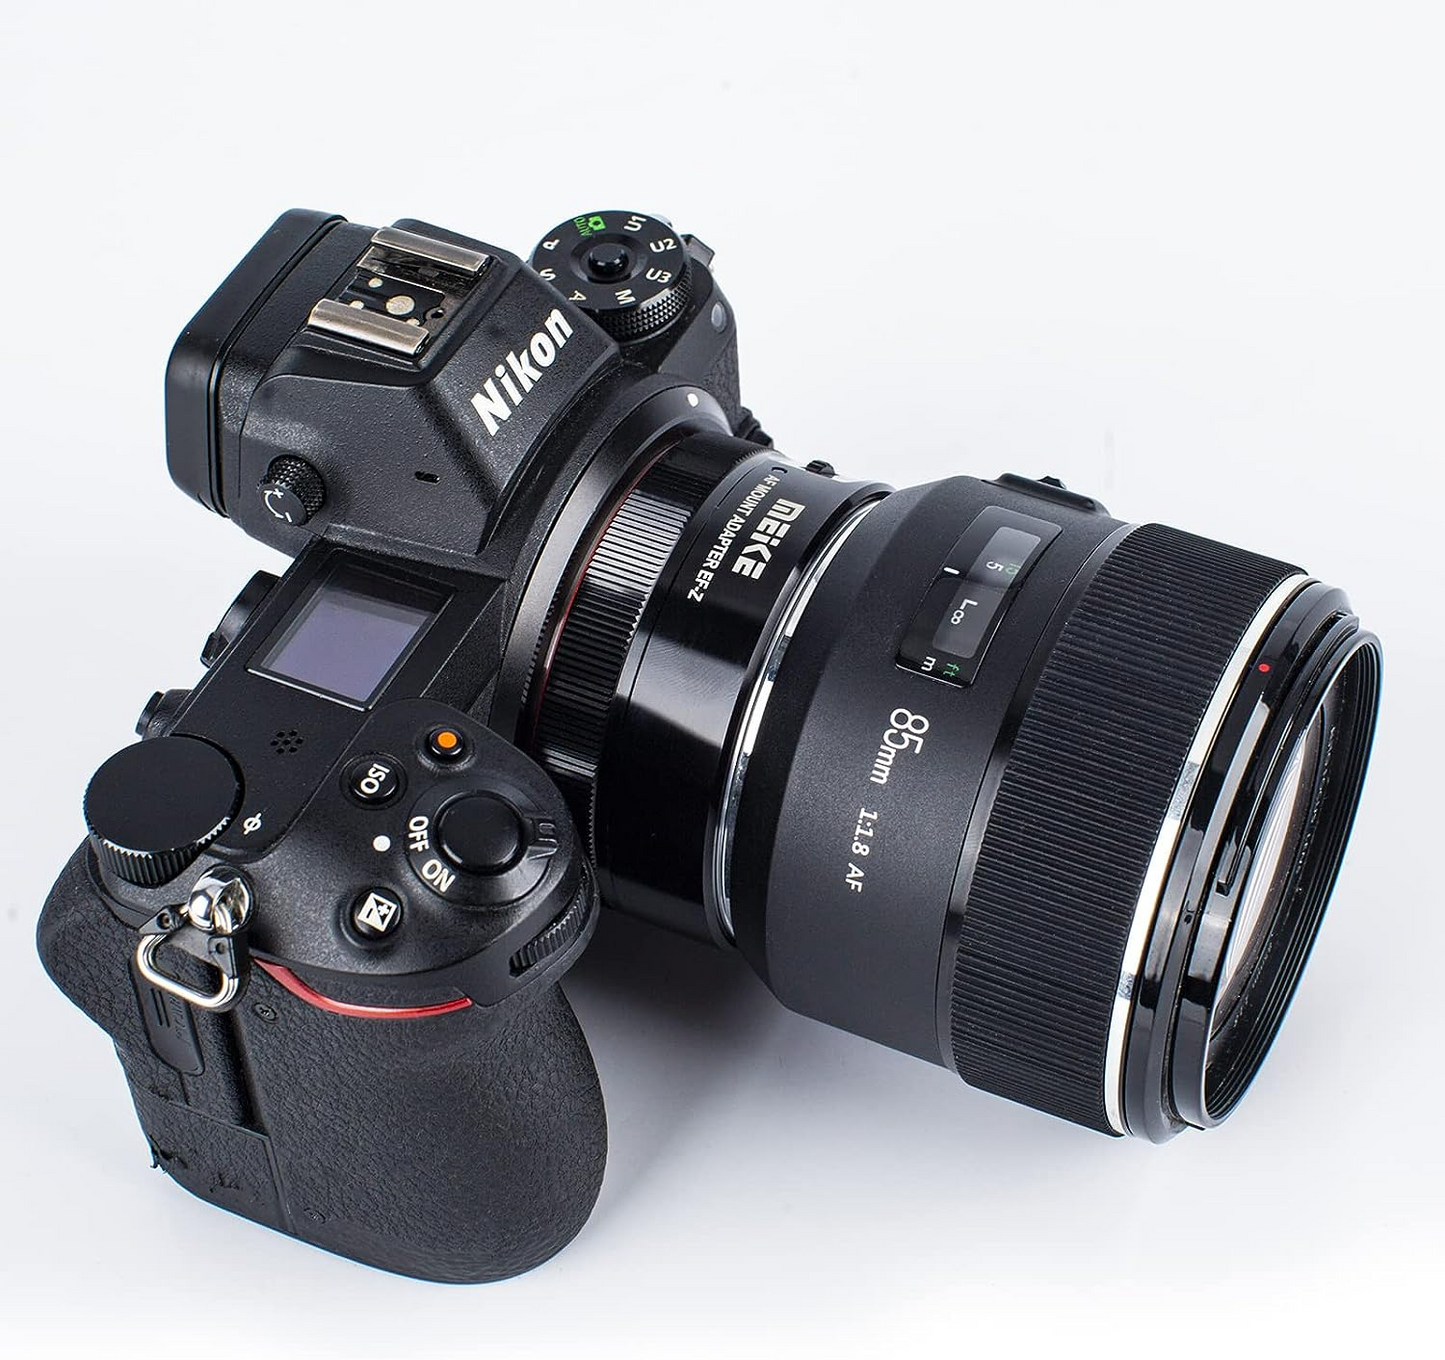 Meike MK-EFTZ-B Auto Focus Mount Adapter for Canon EF/EF-S Lens to Nikon Z Series Camera Z5 / Z6 / Z7 / Z50 / Z6II / Z7II with Built-in Image Stabilization, Support Manual / Auto Aperture DSLR & Mirrorless Camera